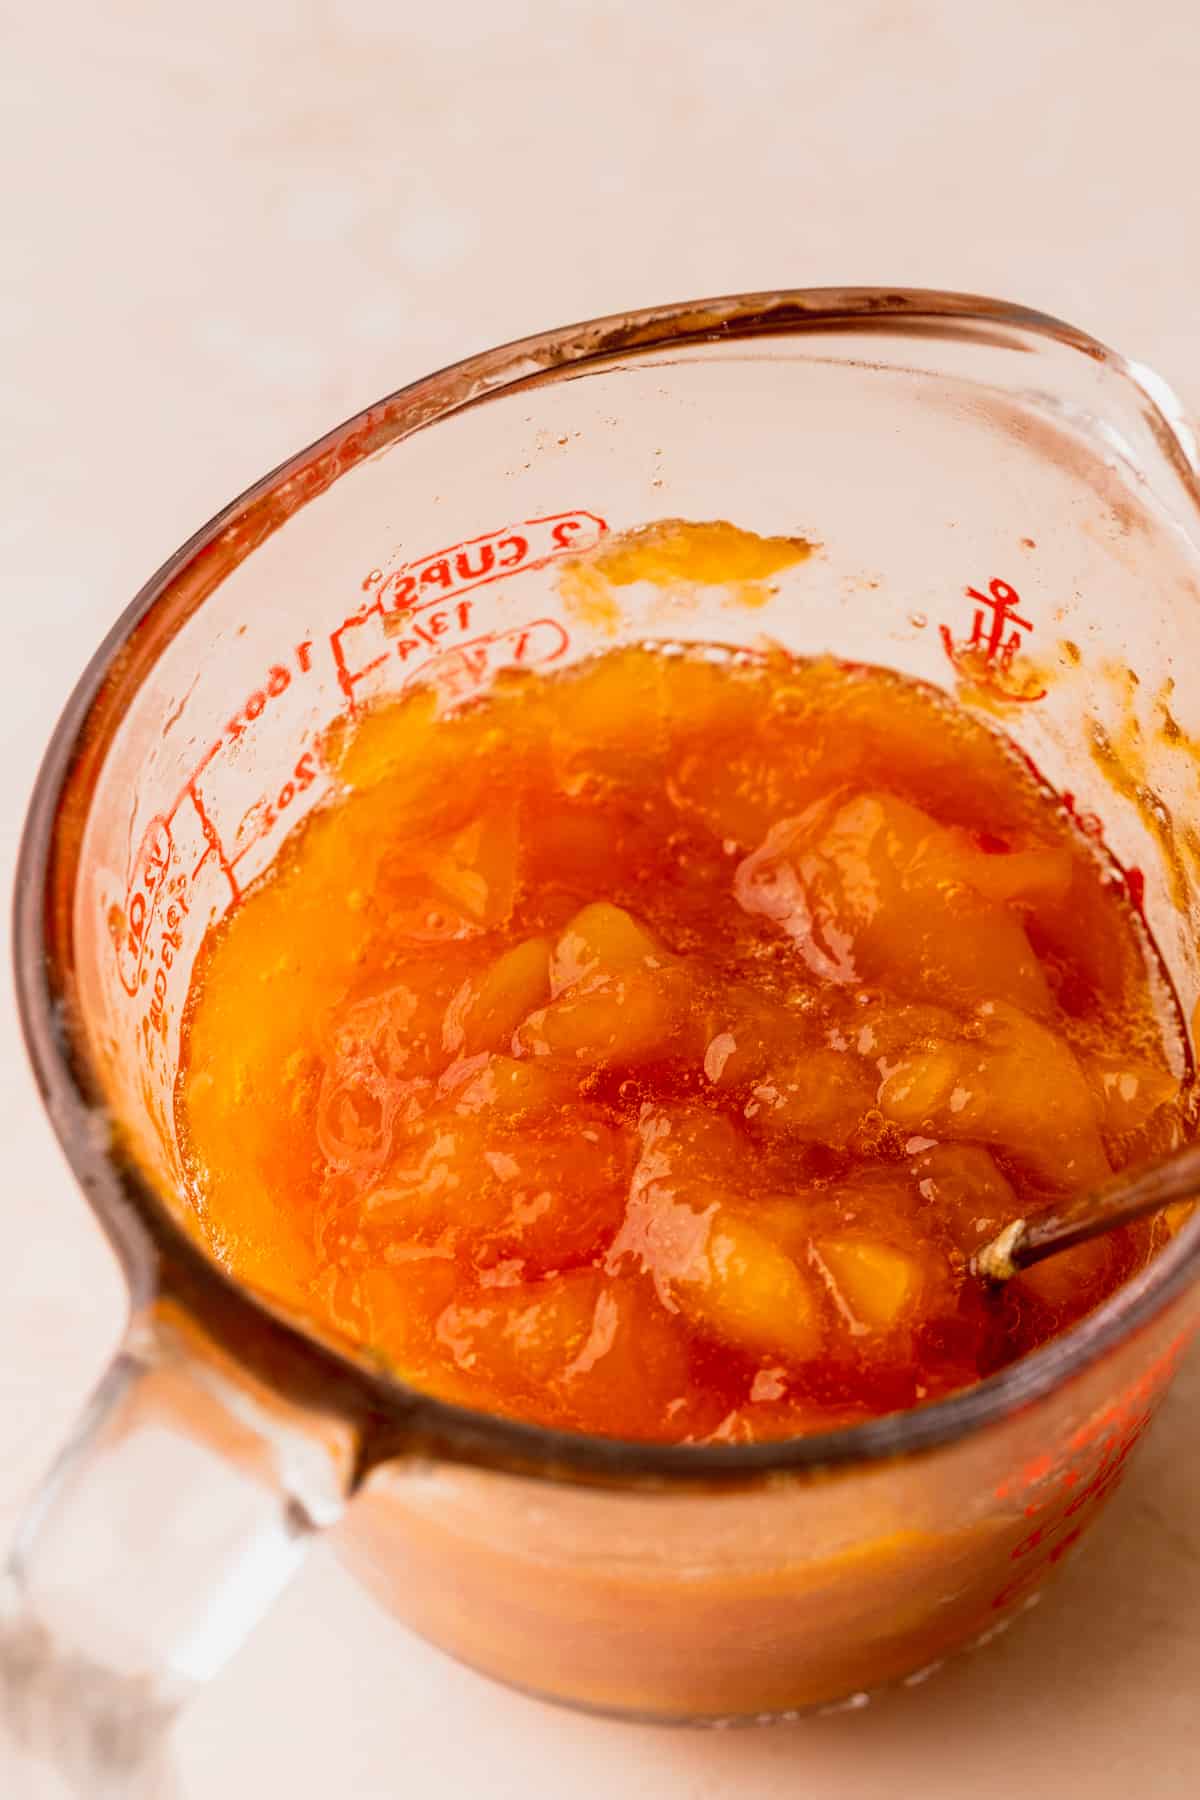 Peach jam in a measuring cup.